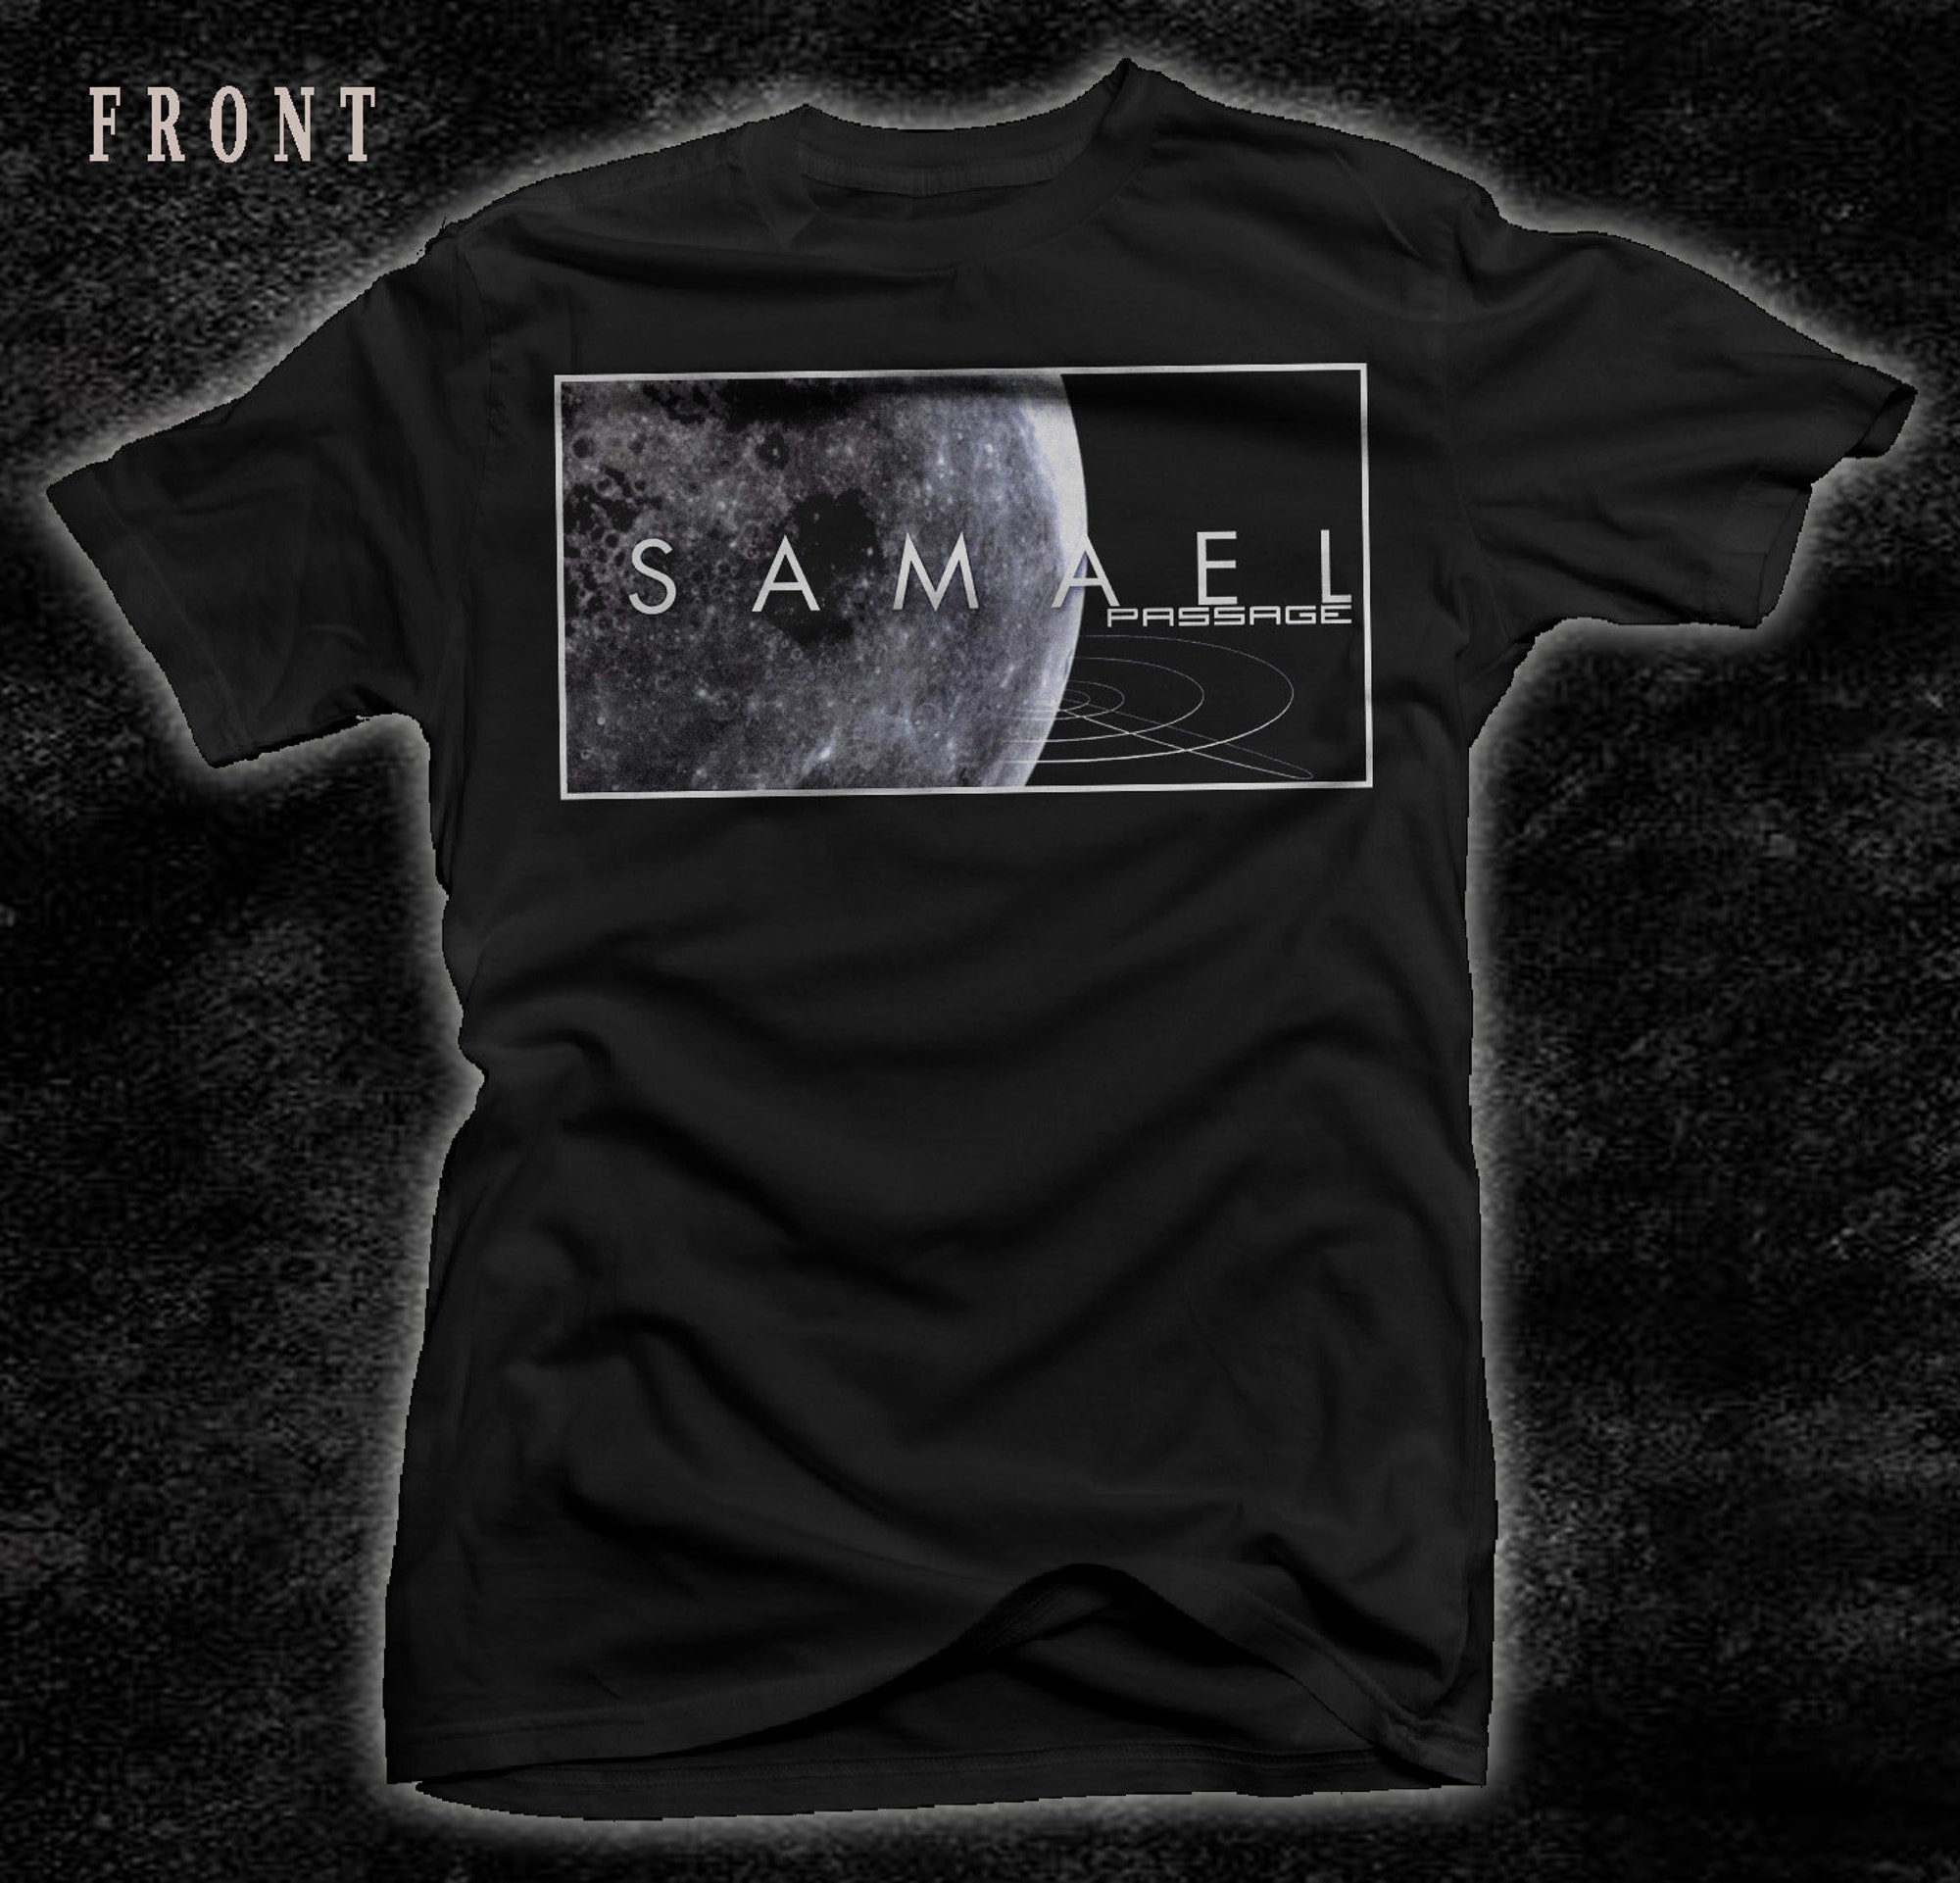 SAMAEL-Passage T-shirt